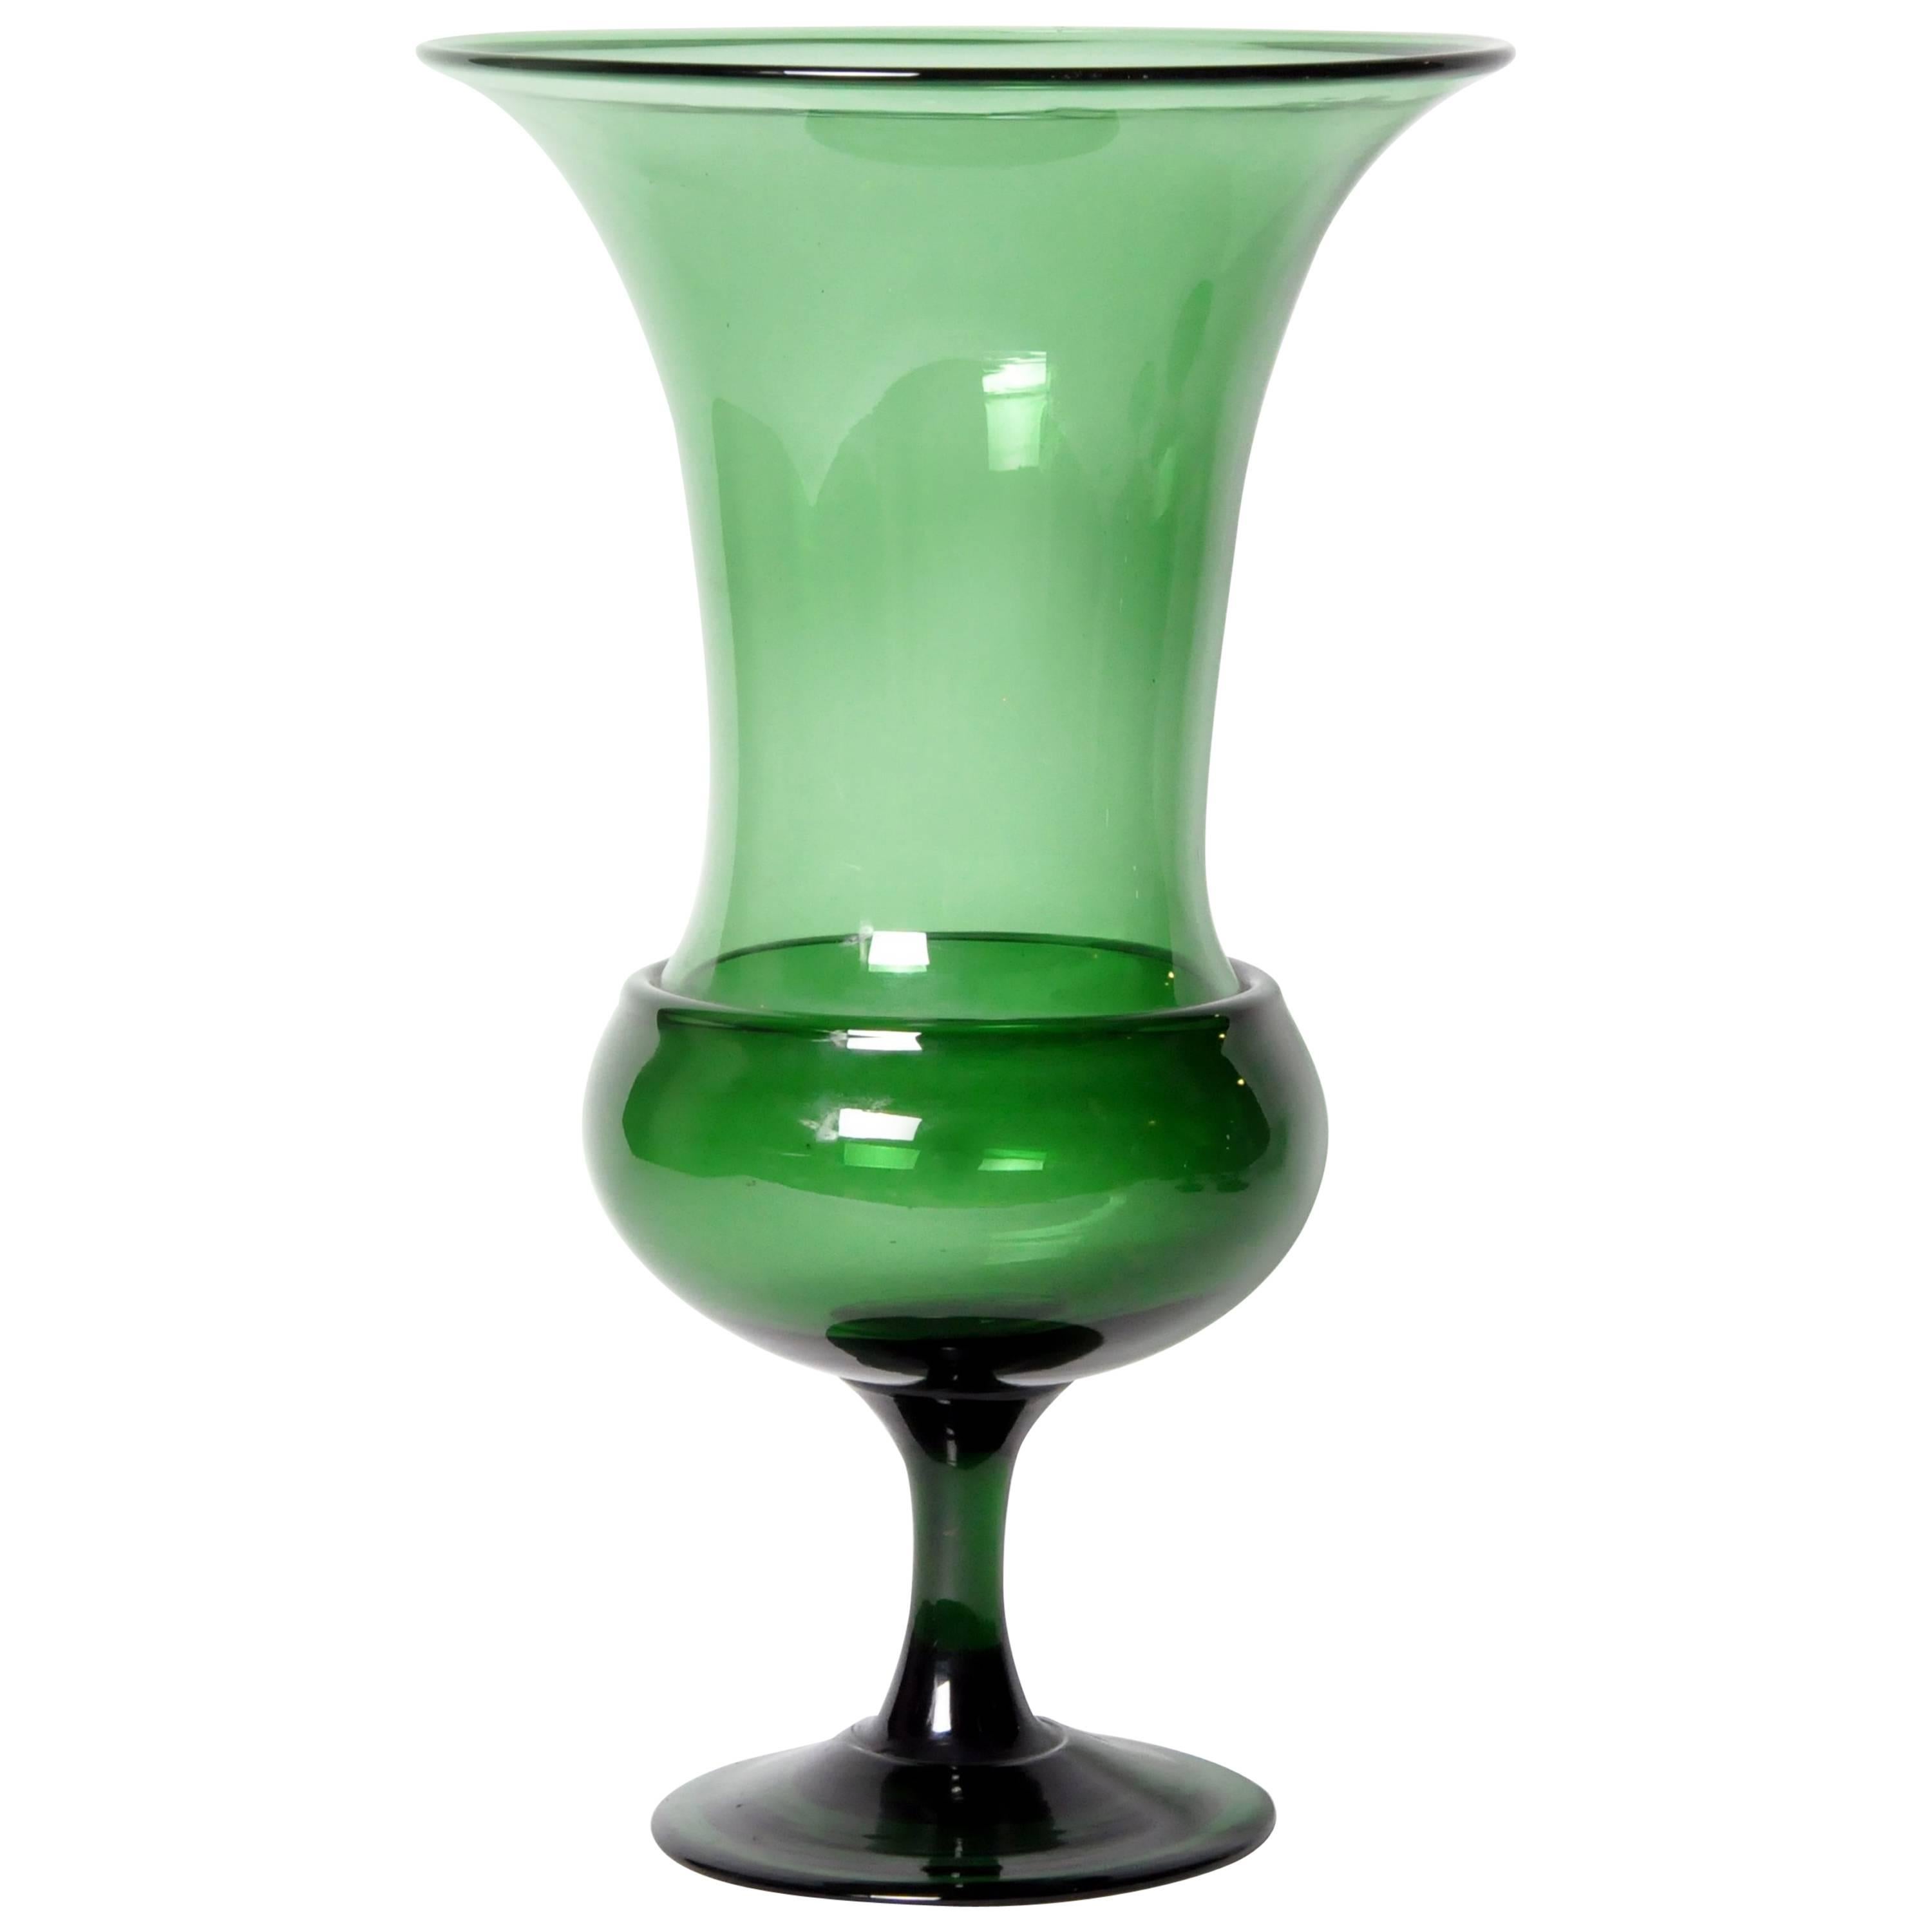 Green Empoli Glass Vase